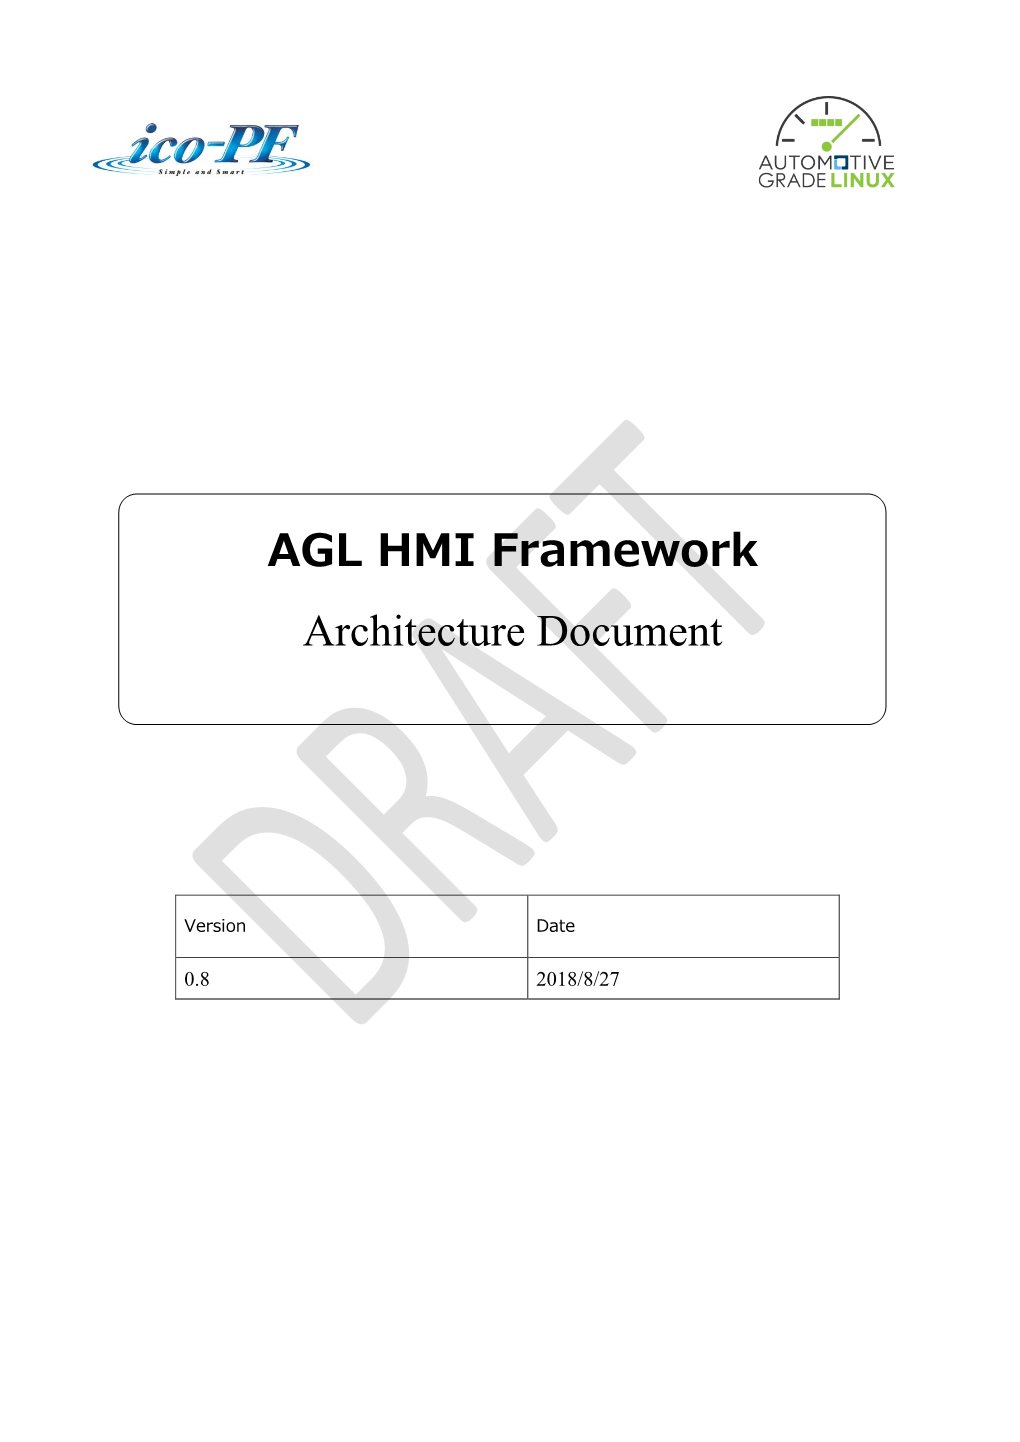 AGL HMI Framework Architecture Document